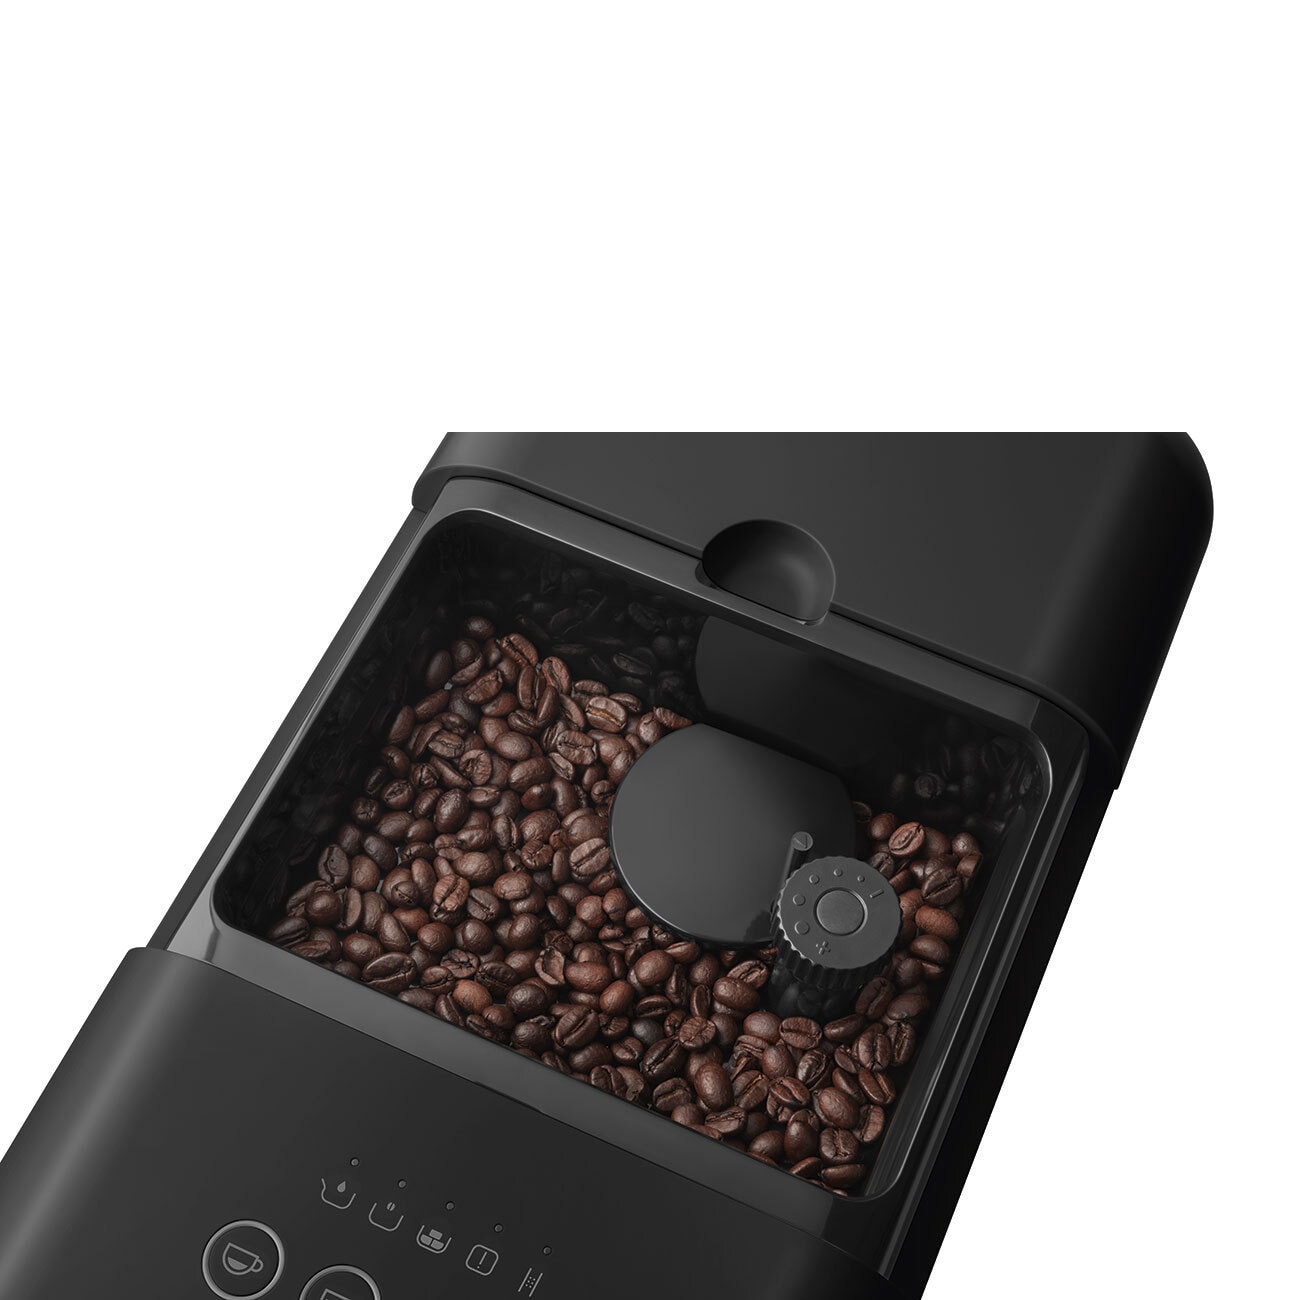 SMEG Kaffeevollautomat schwarz/ silberfarbig